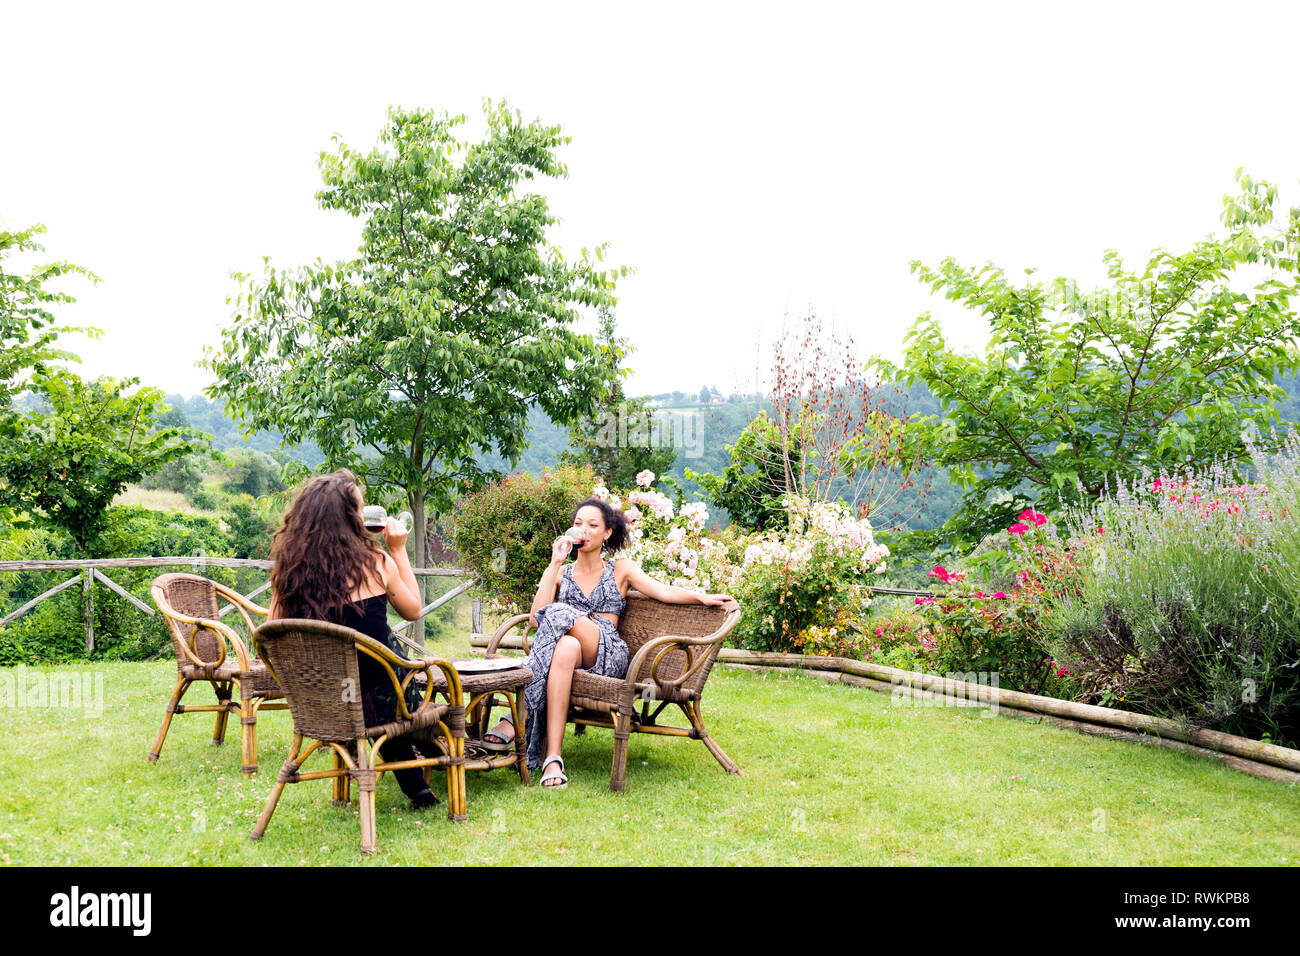 Women on wicker chairs in countryside garden, Città della Pieve, Umbria, Italy Stock Photo